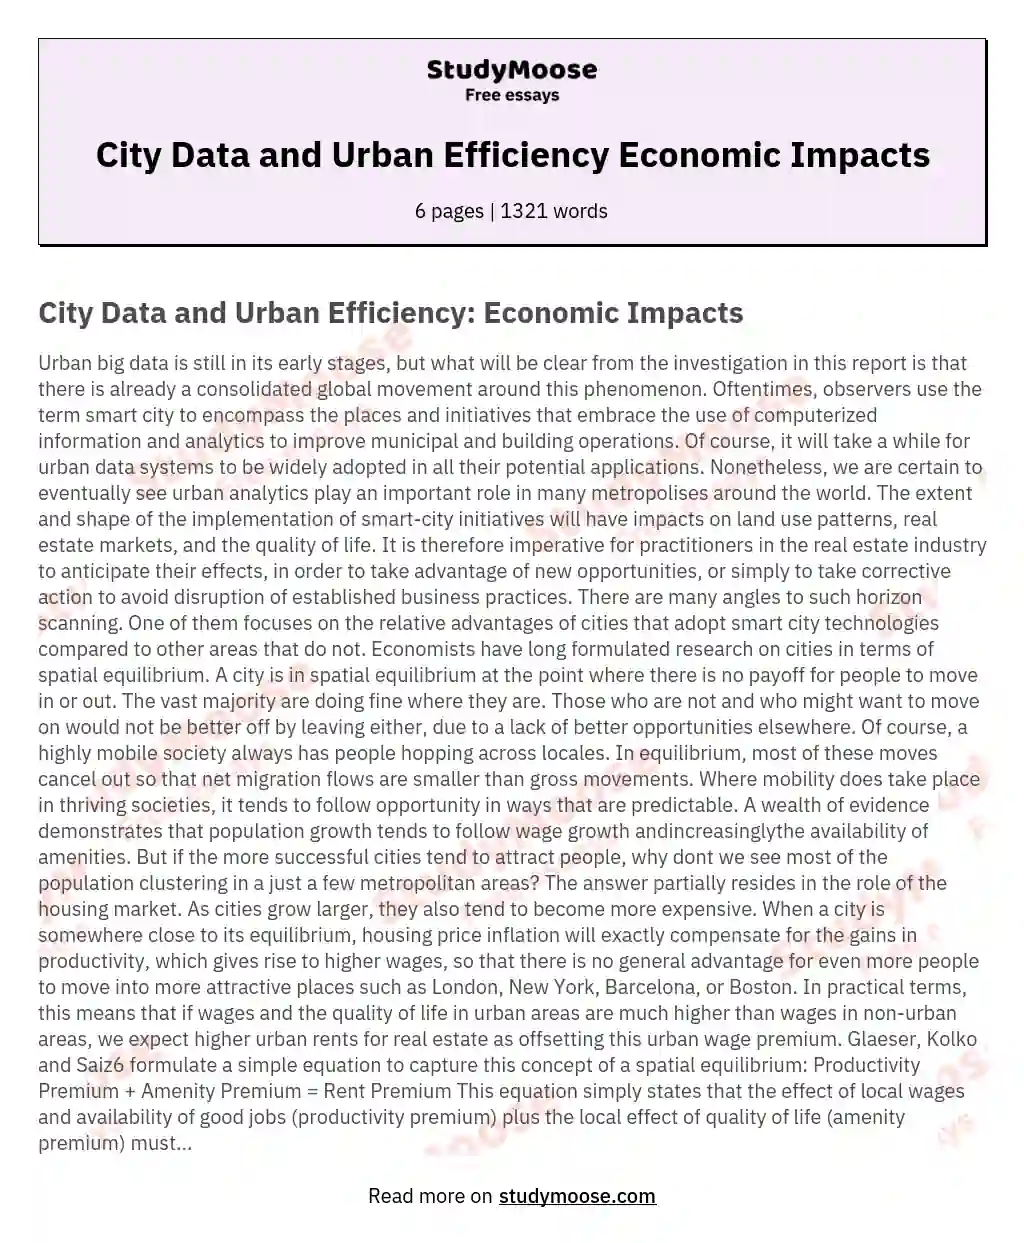 City Data and Urban Efficiency Economic Impacts essay